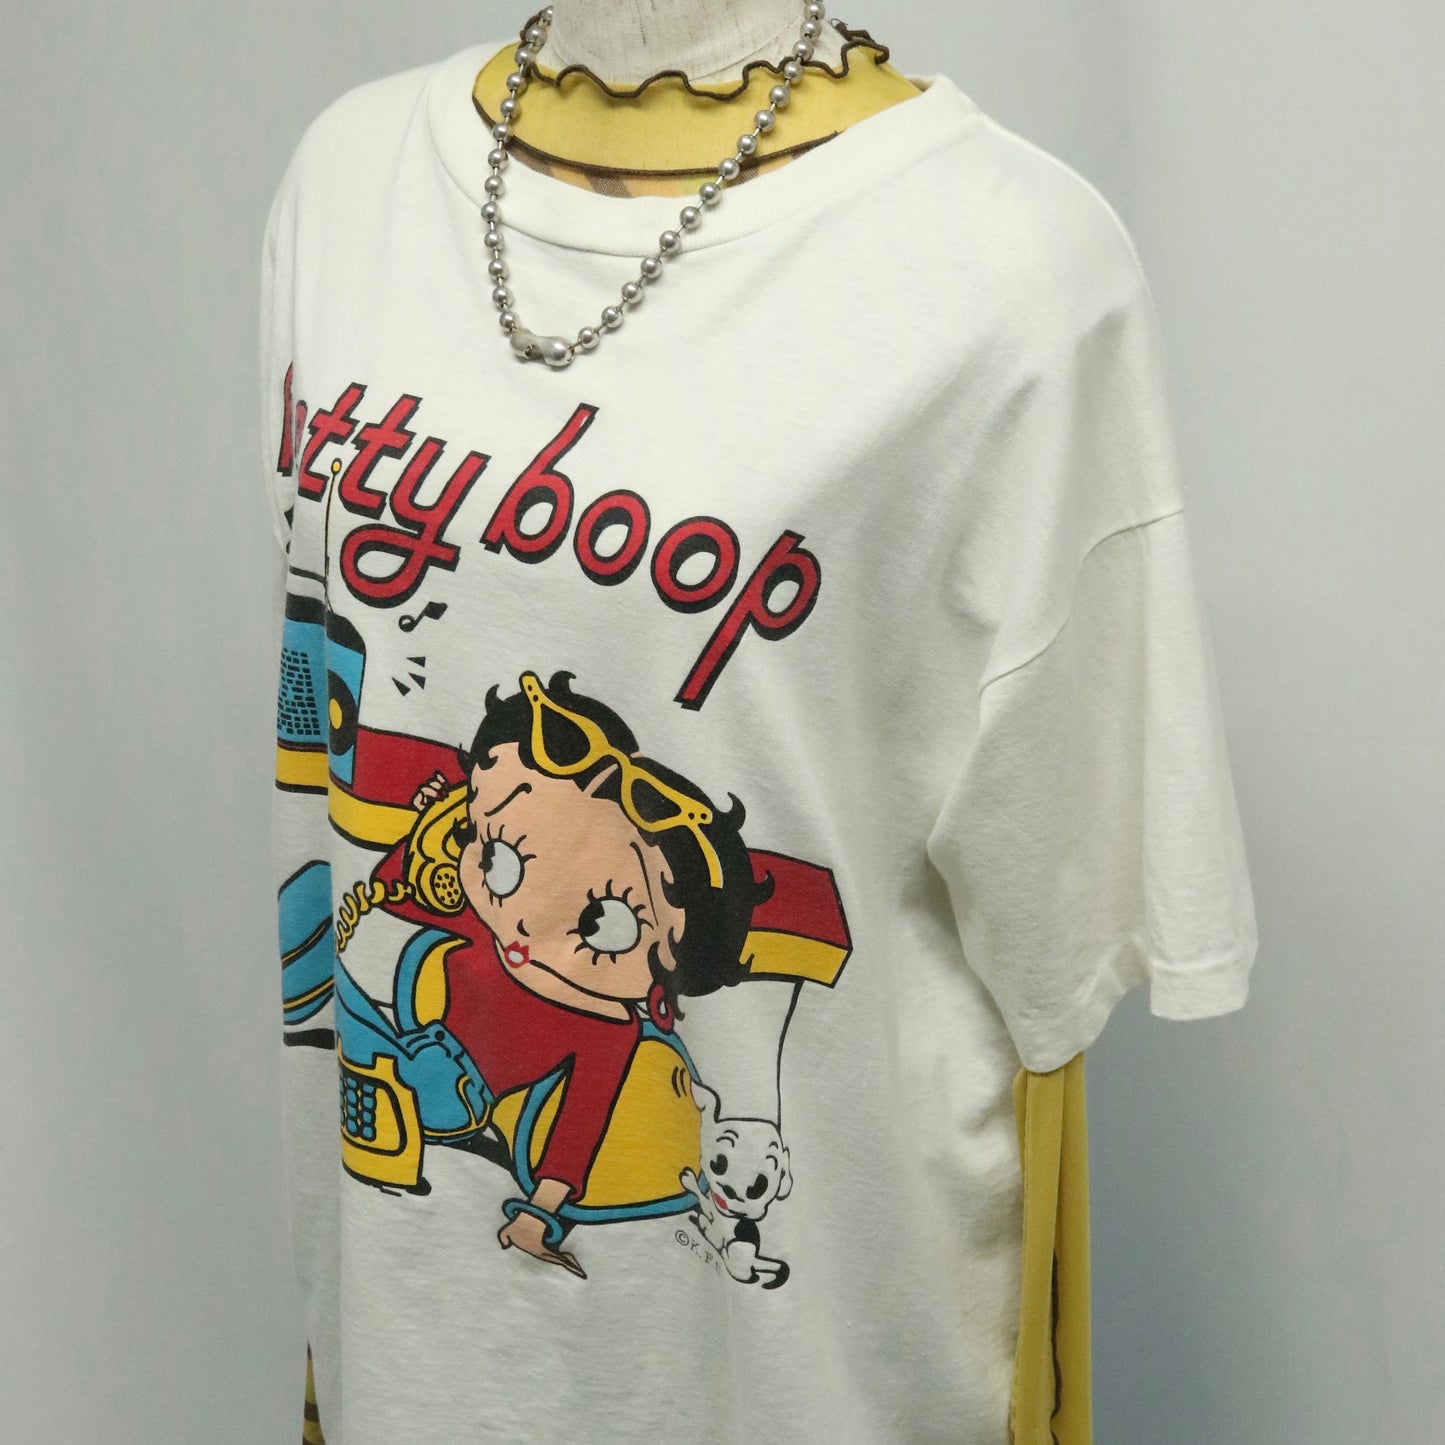 90's "Betty Boop" print t-shirt